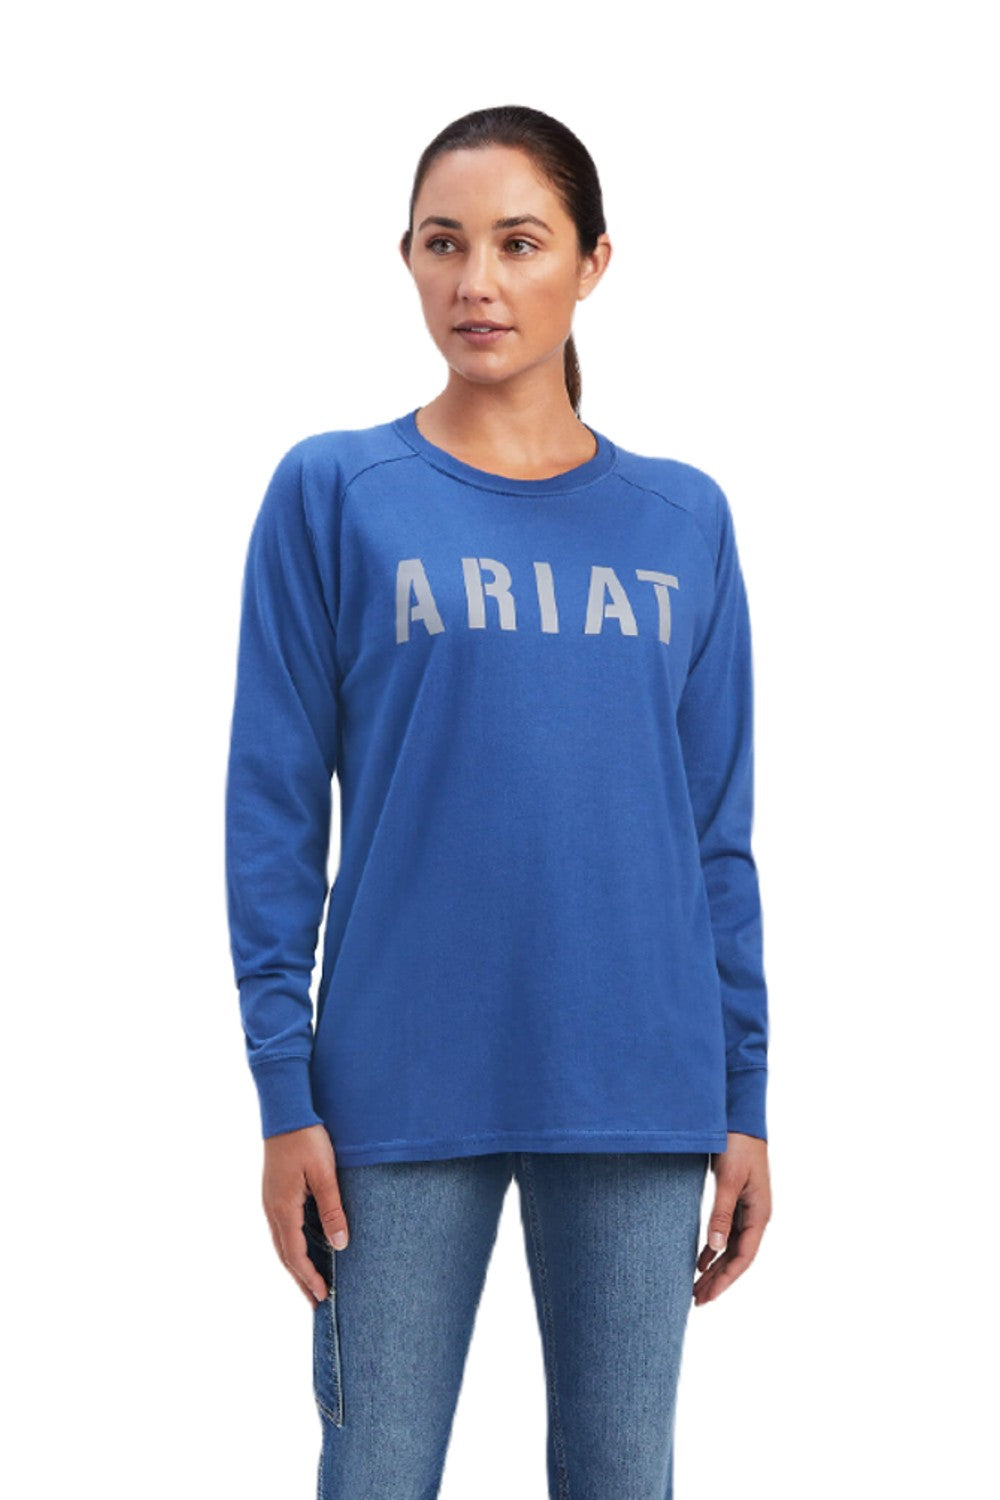 Ariat Rebar Ladies CottonStrong Block T-Shirt in True Navy/Alloy 